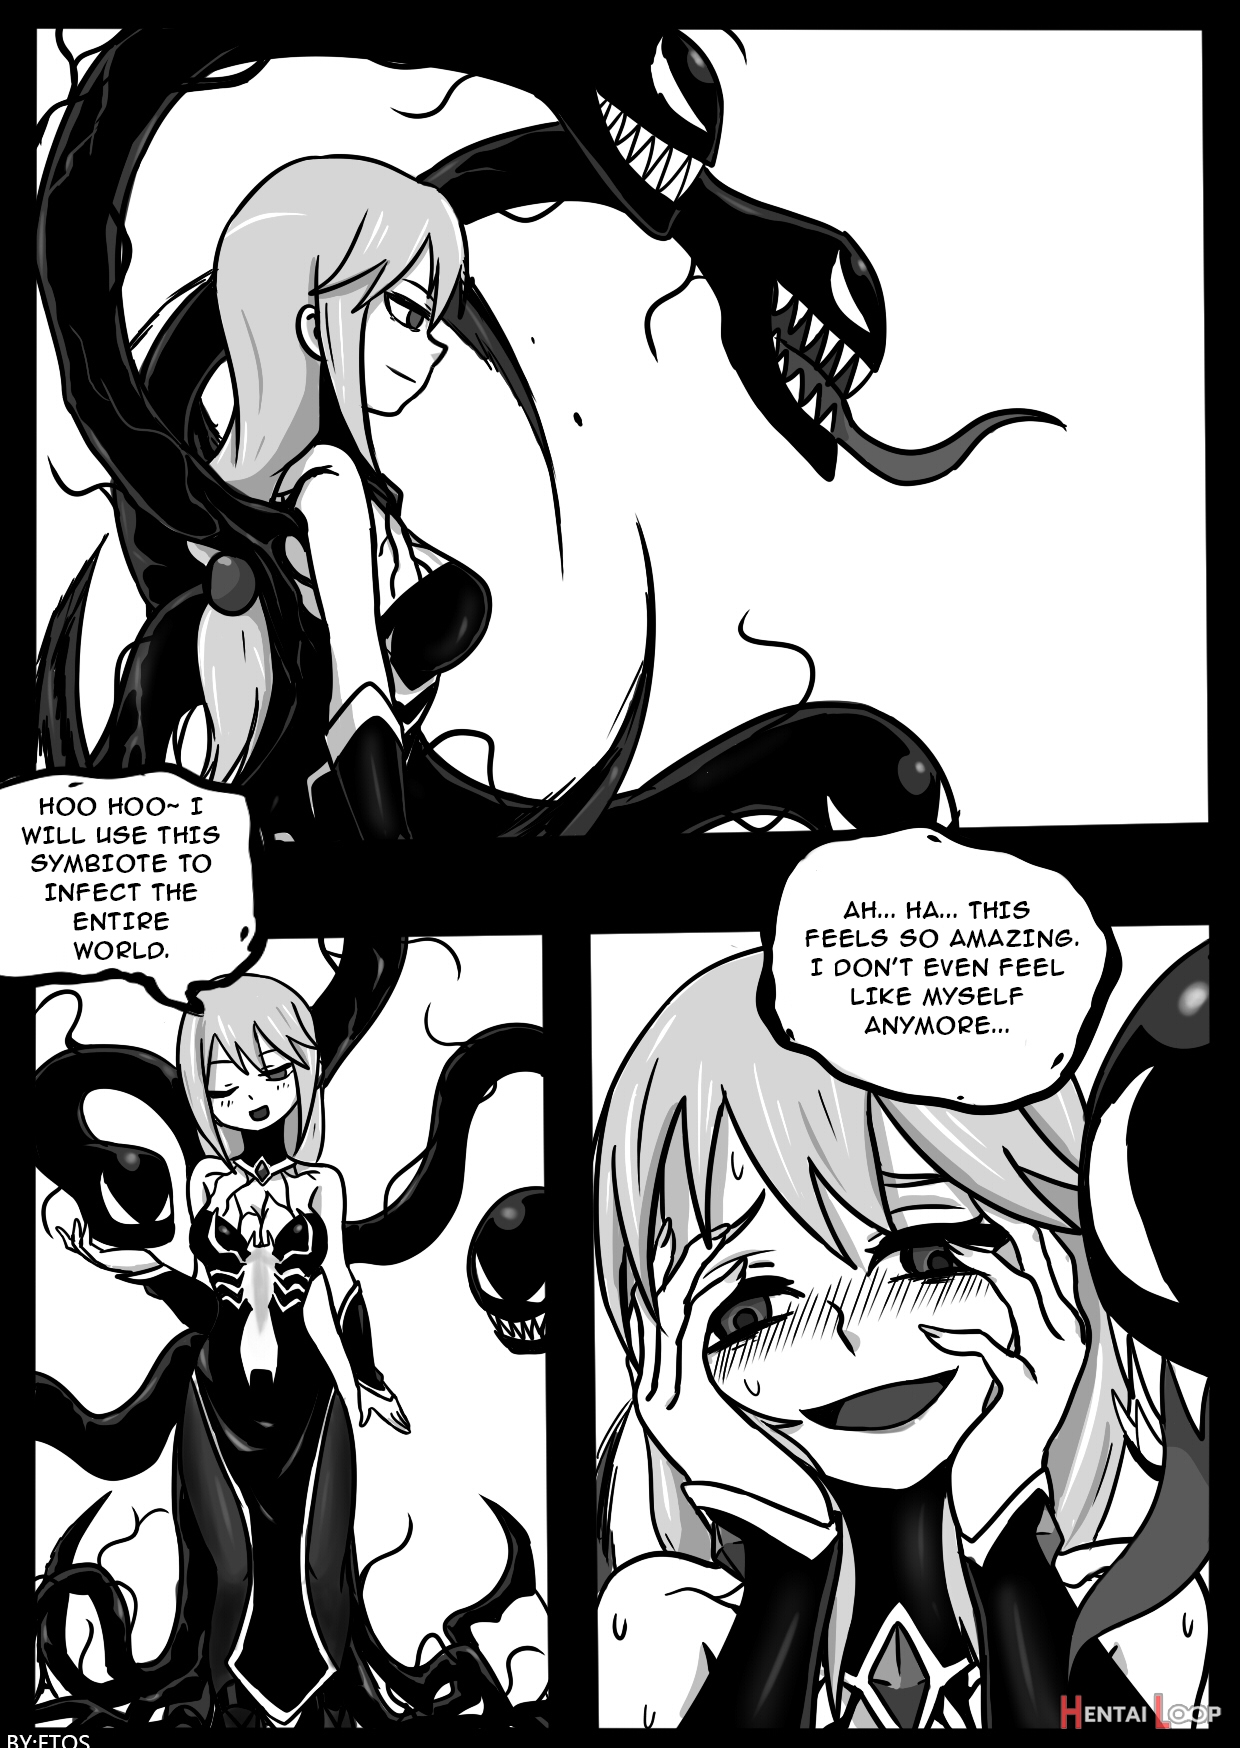 Spreading Venom On This Wonderful World page 39